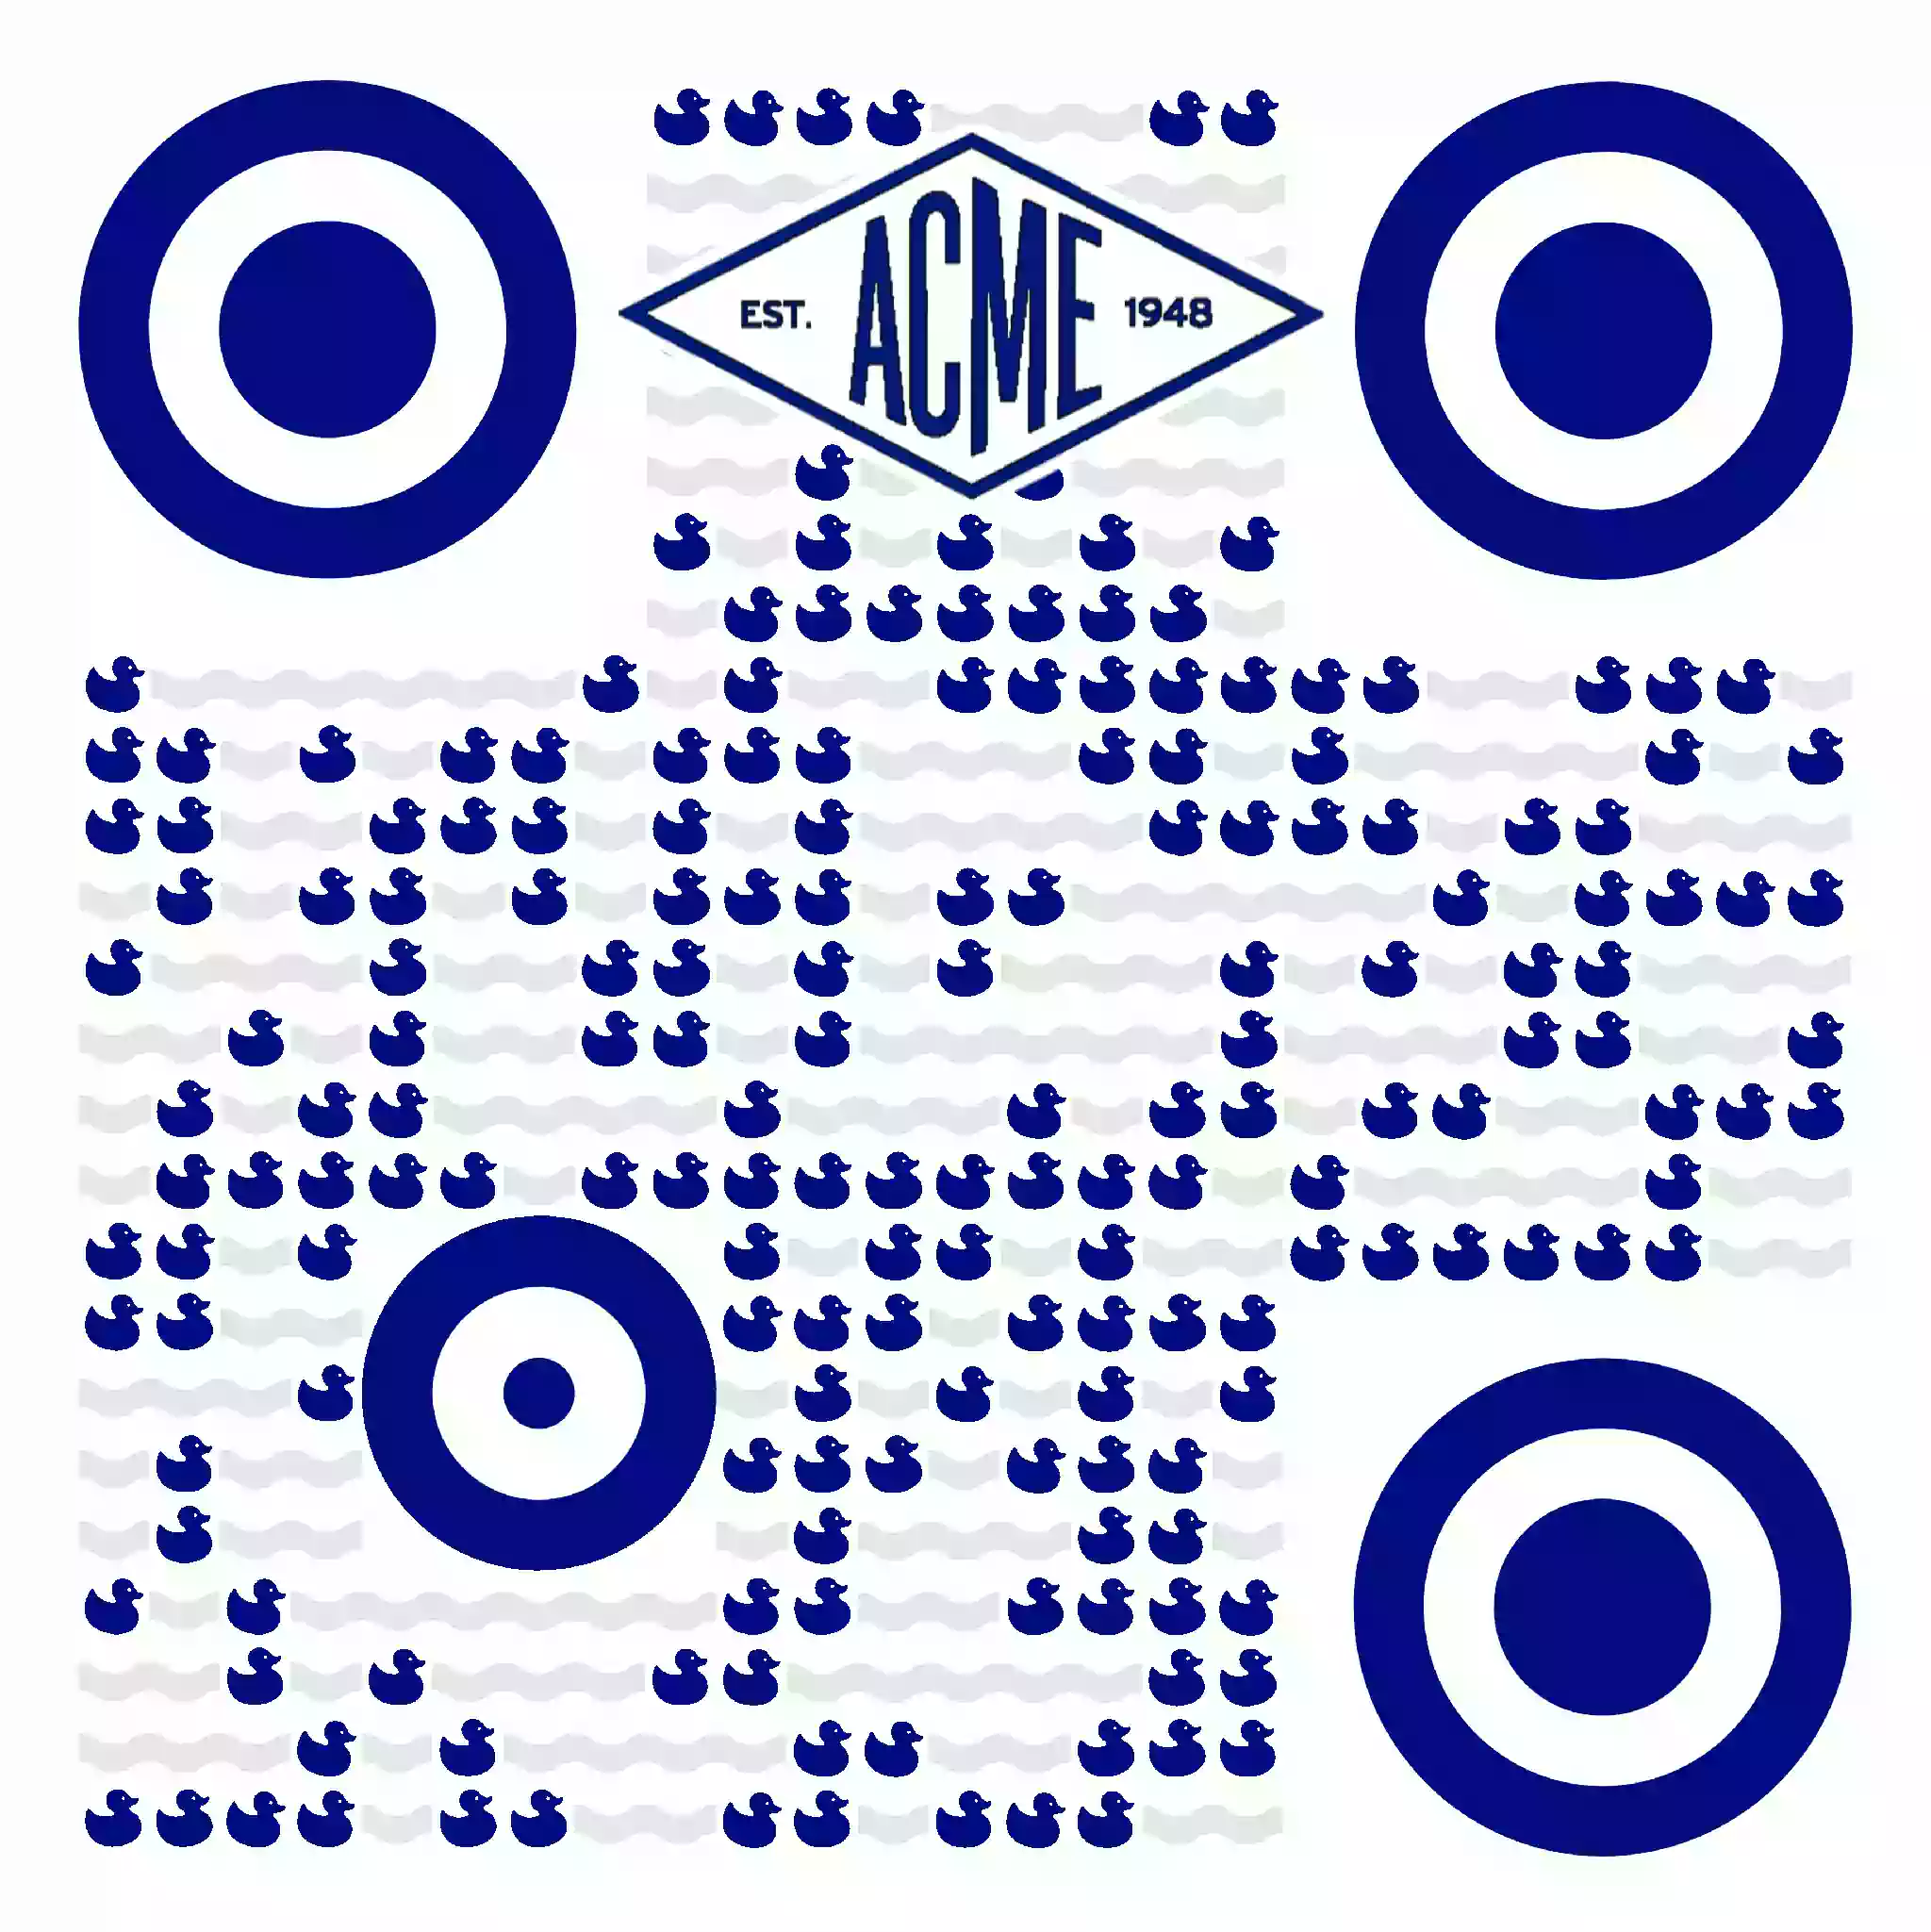 QrcodeLab online qr code generator - qr code image editor - branding qr code with Acme logo